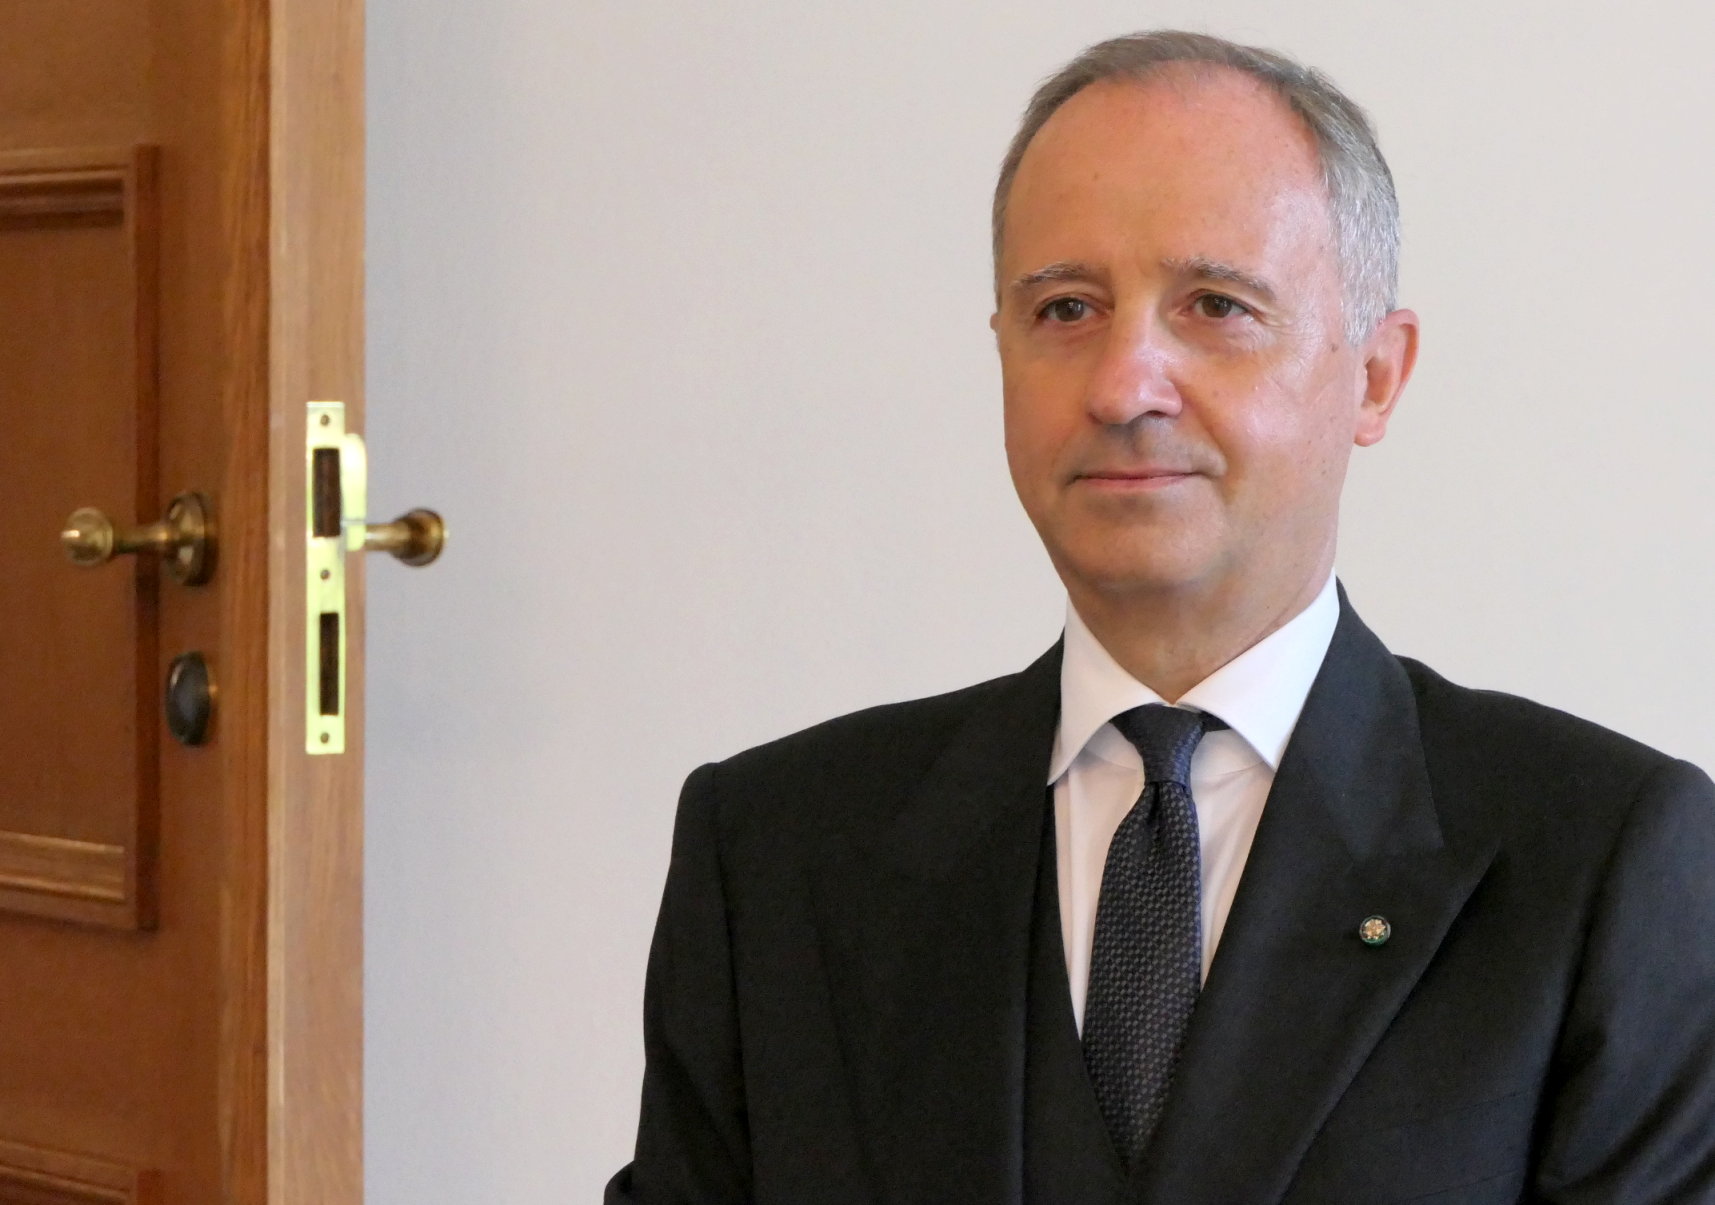 Botschafter der Italienischen Republik, Armando Varricchio, bei Bundespräsident Frank-Walter Steinmeier im Schloss Bellevue akkreditiert